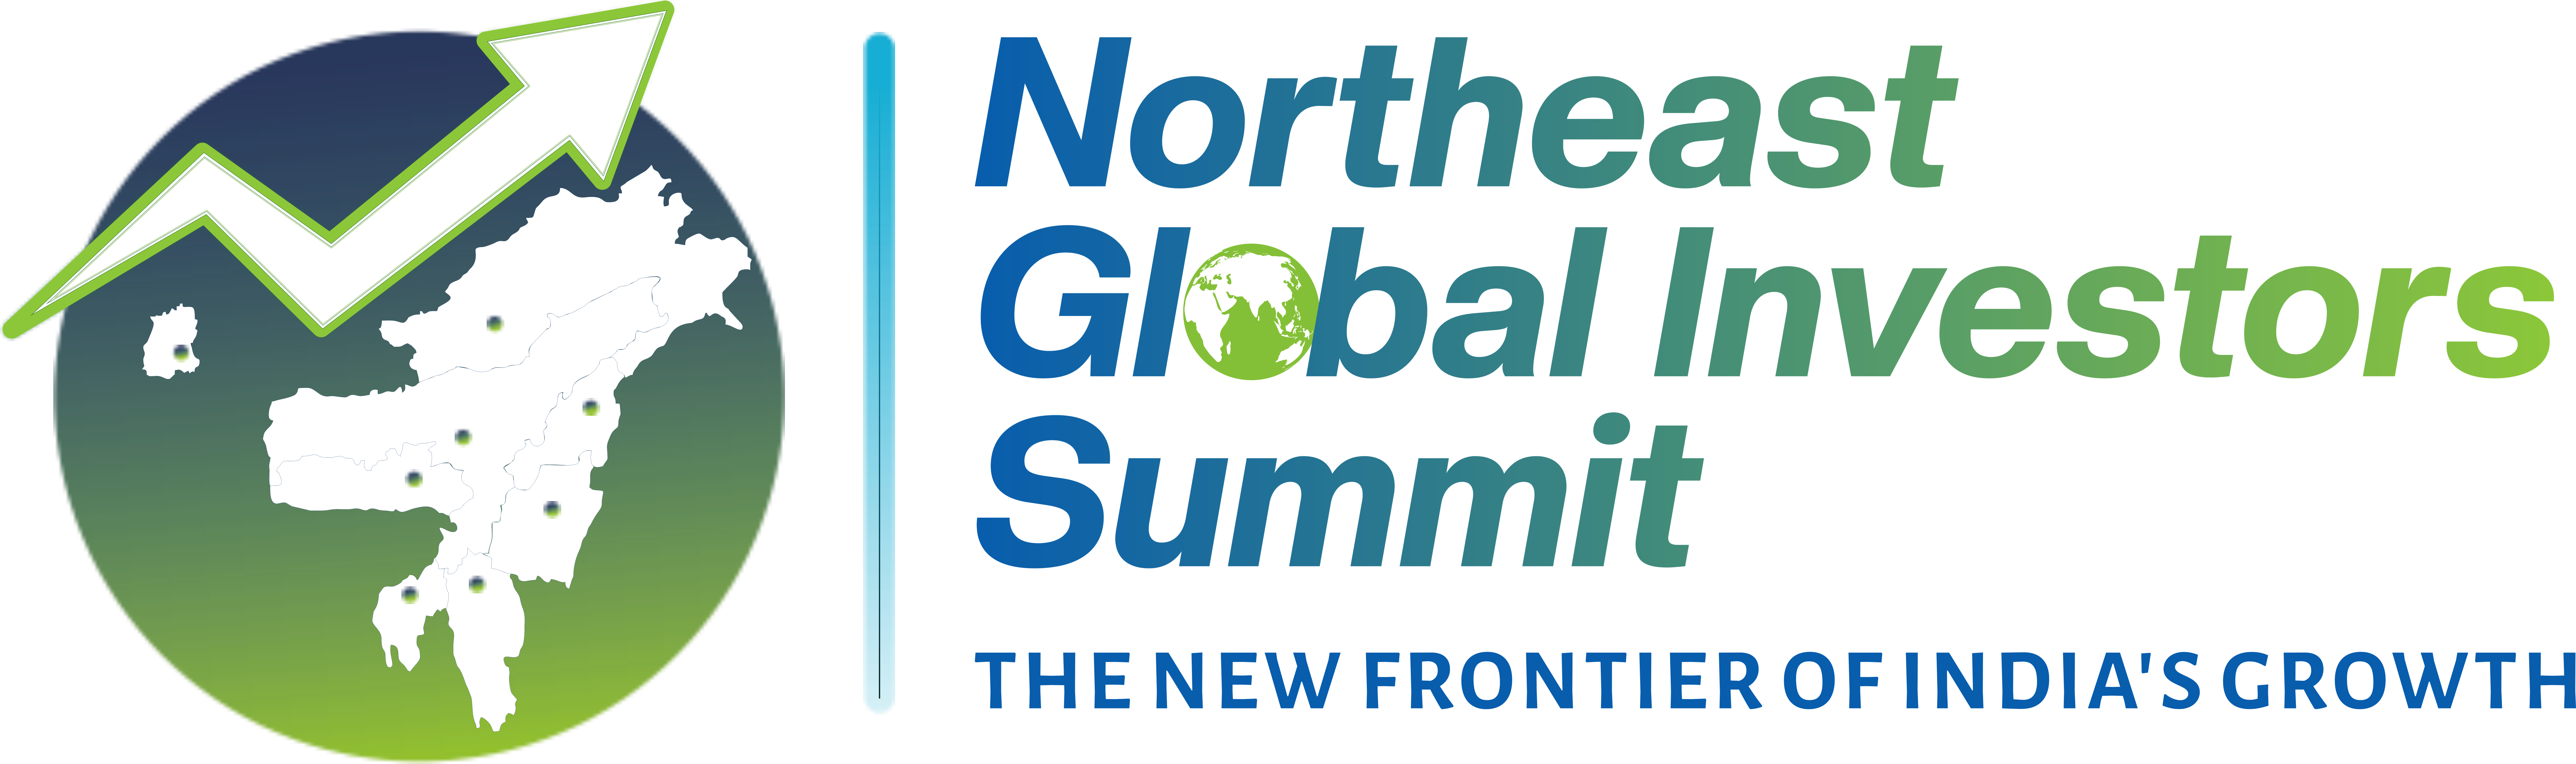 Northeast Global Investors Summit